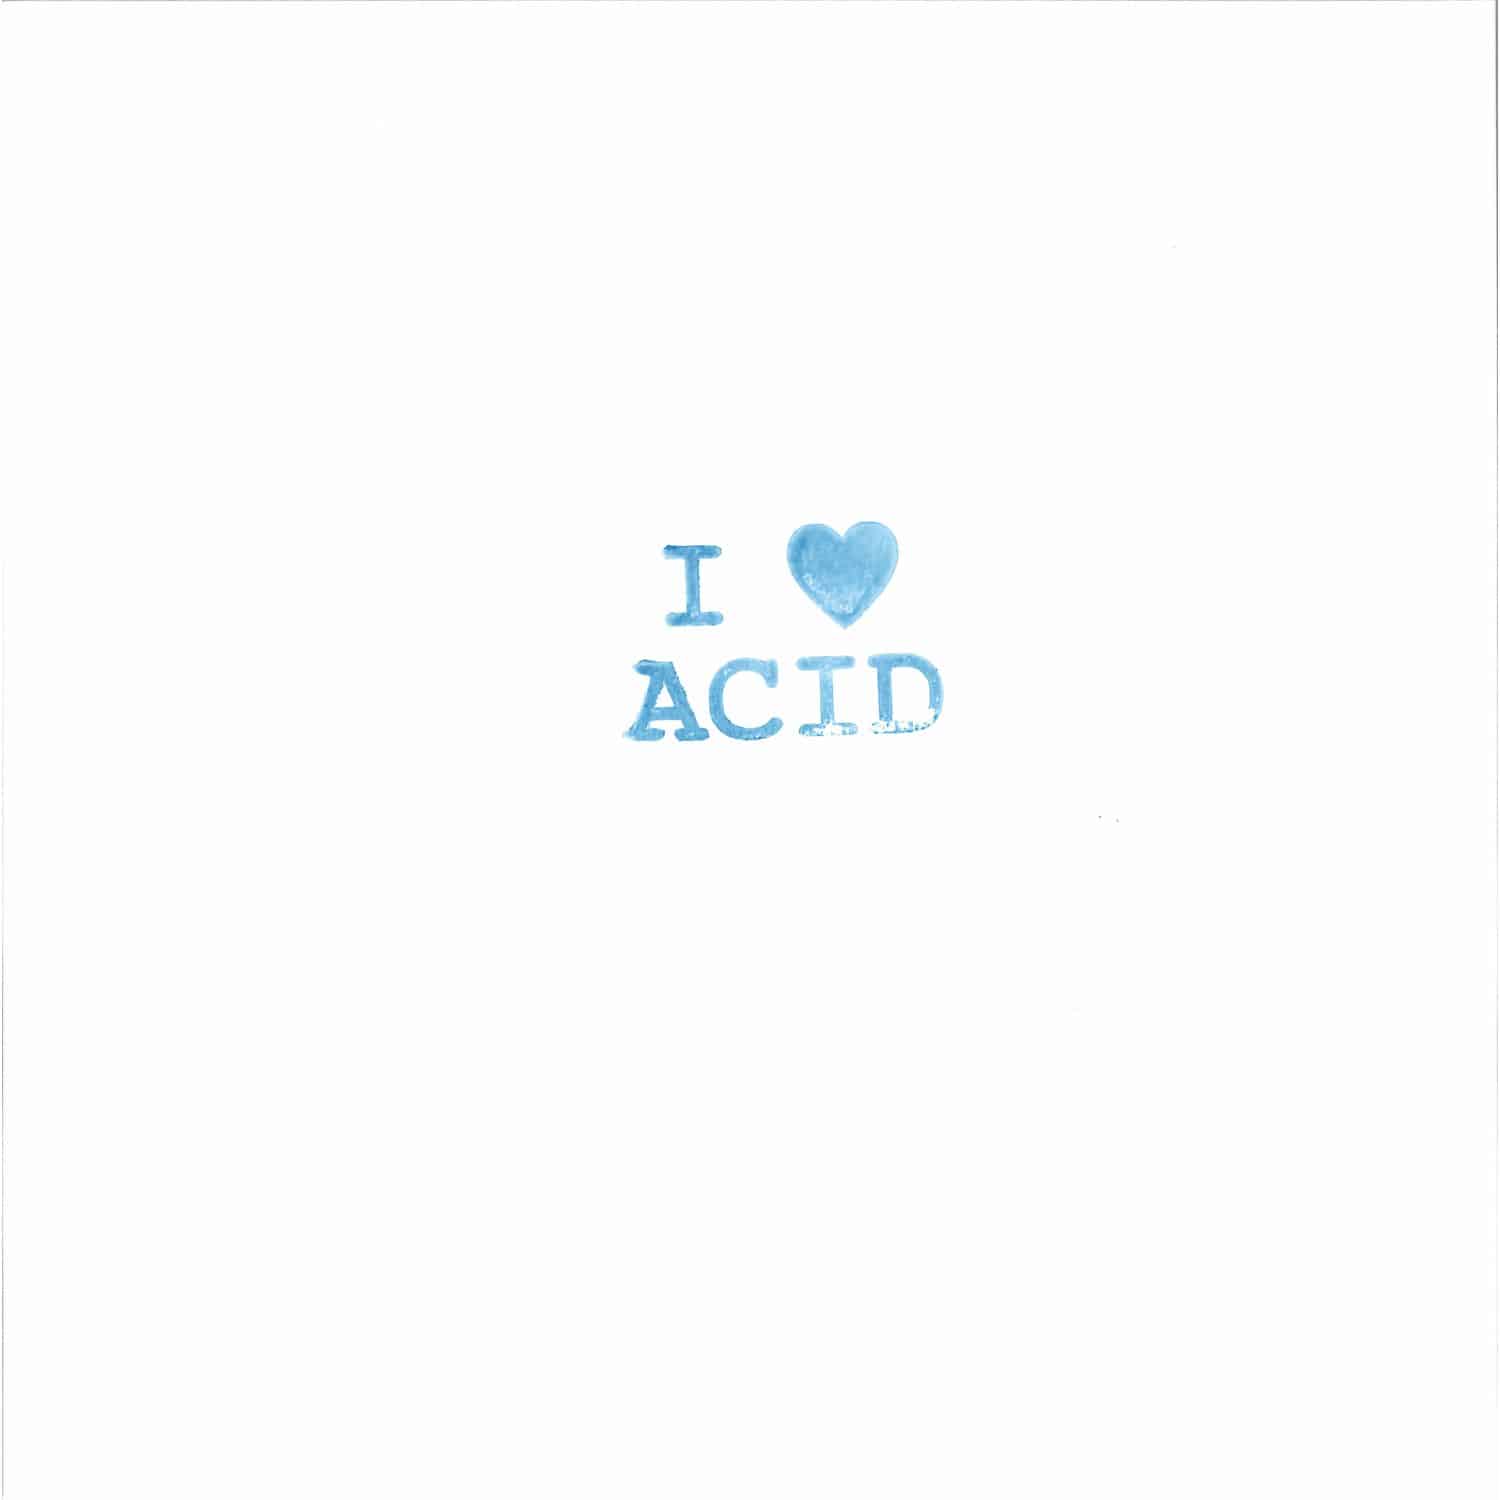 Acidulant - I LOVE ACID 028